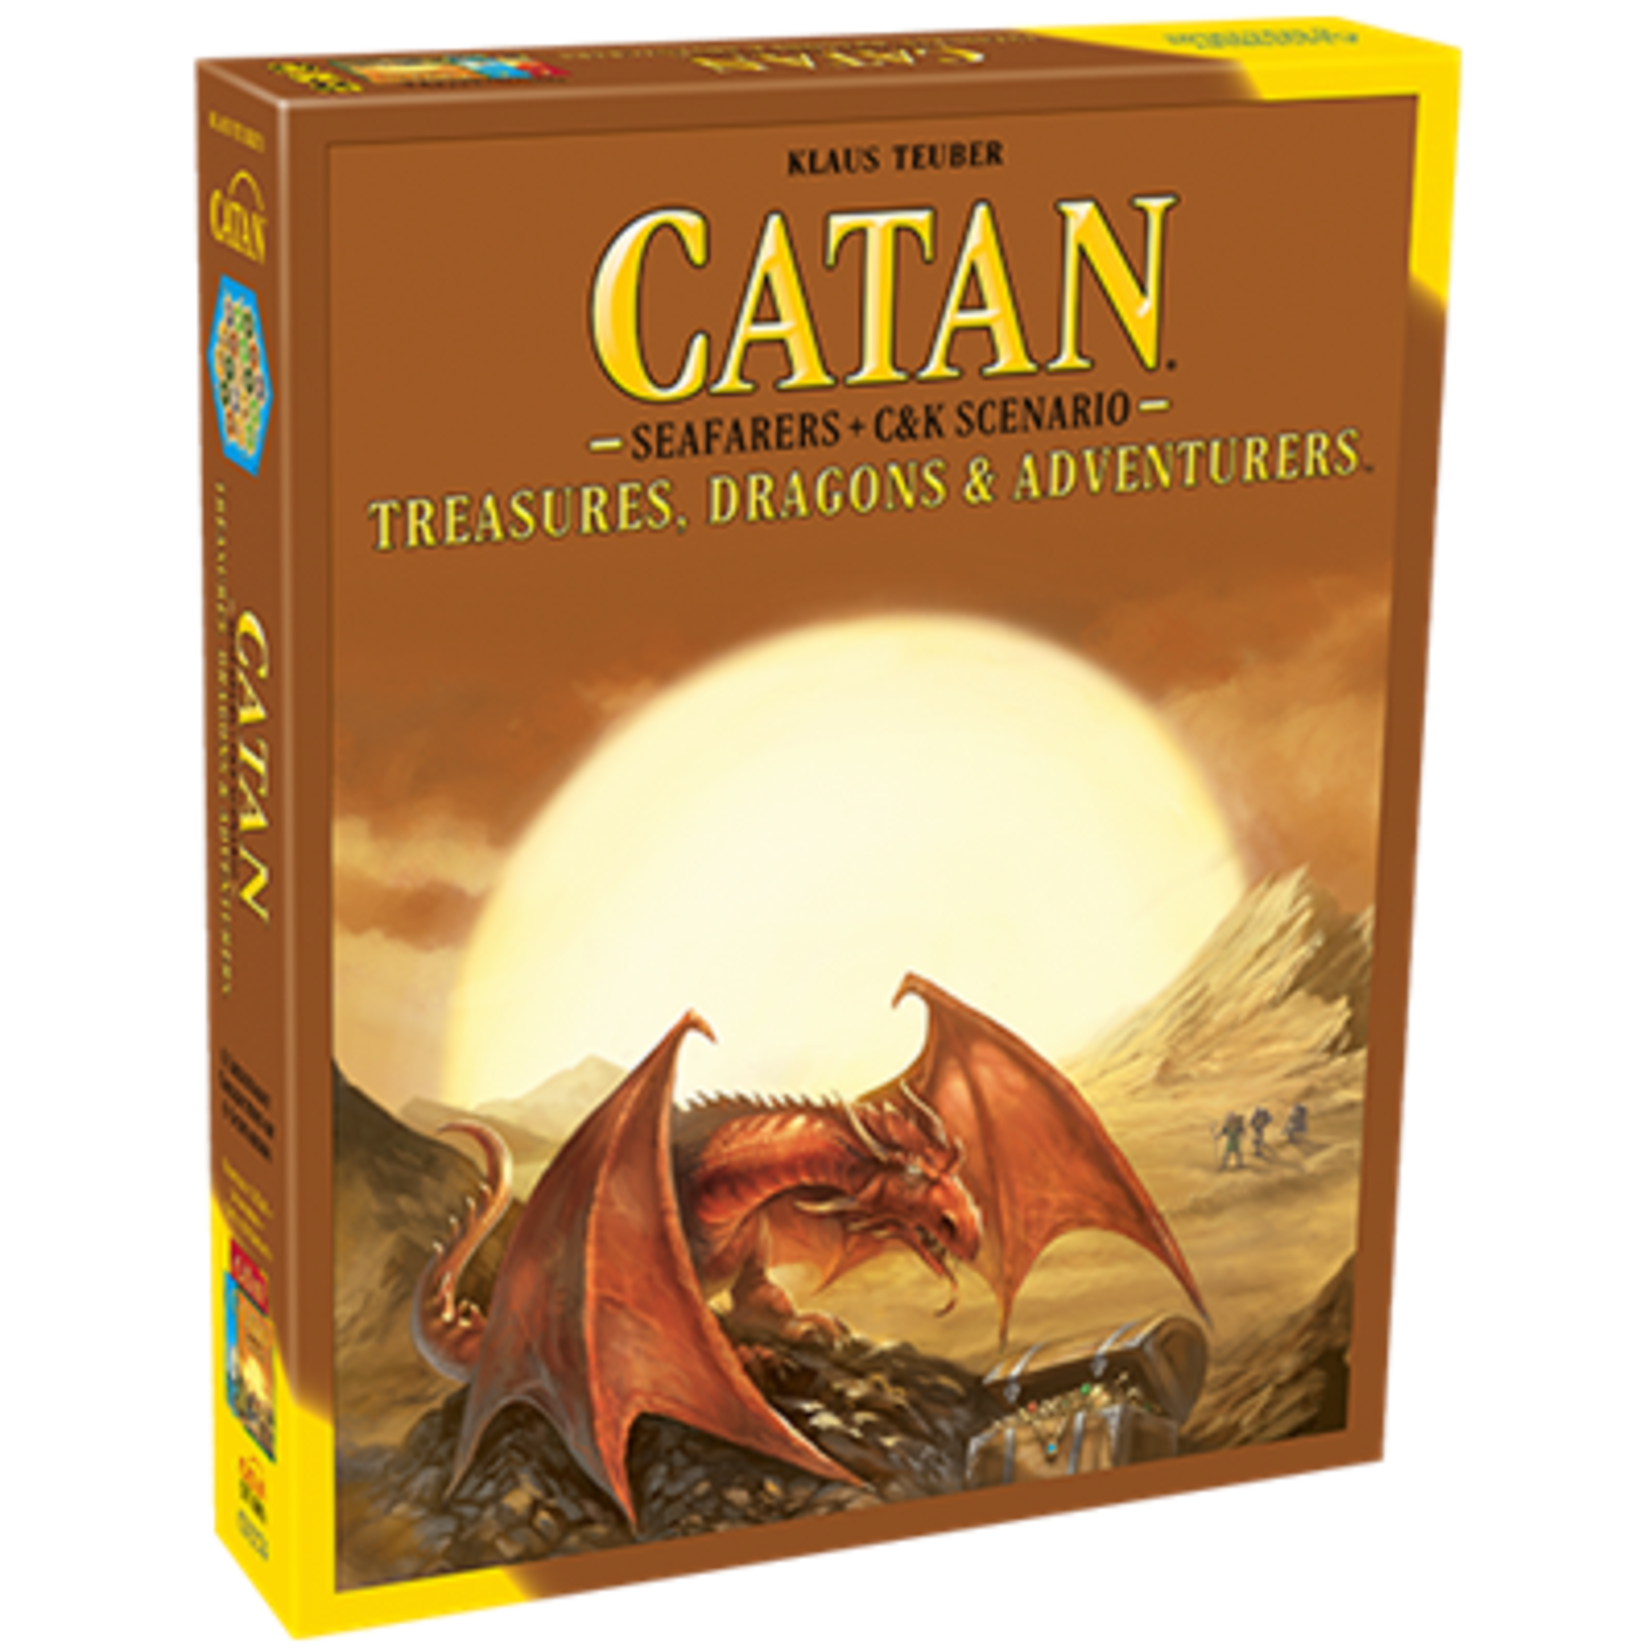 Catan Studio Catan - Treasures, Dragons & Adventures Expansion